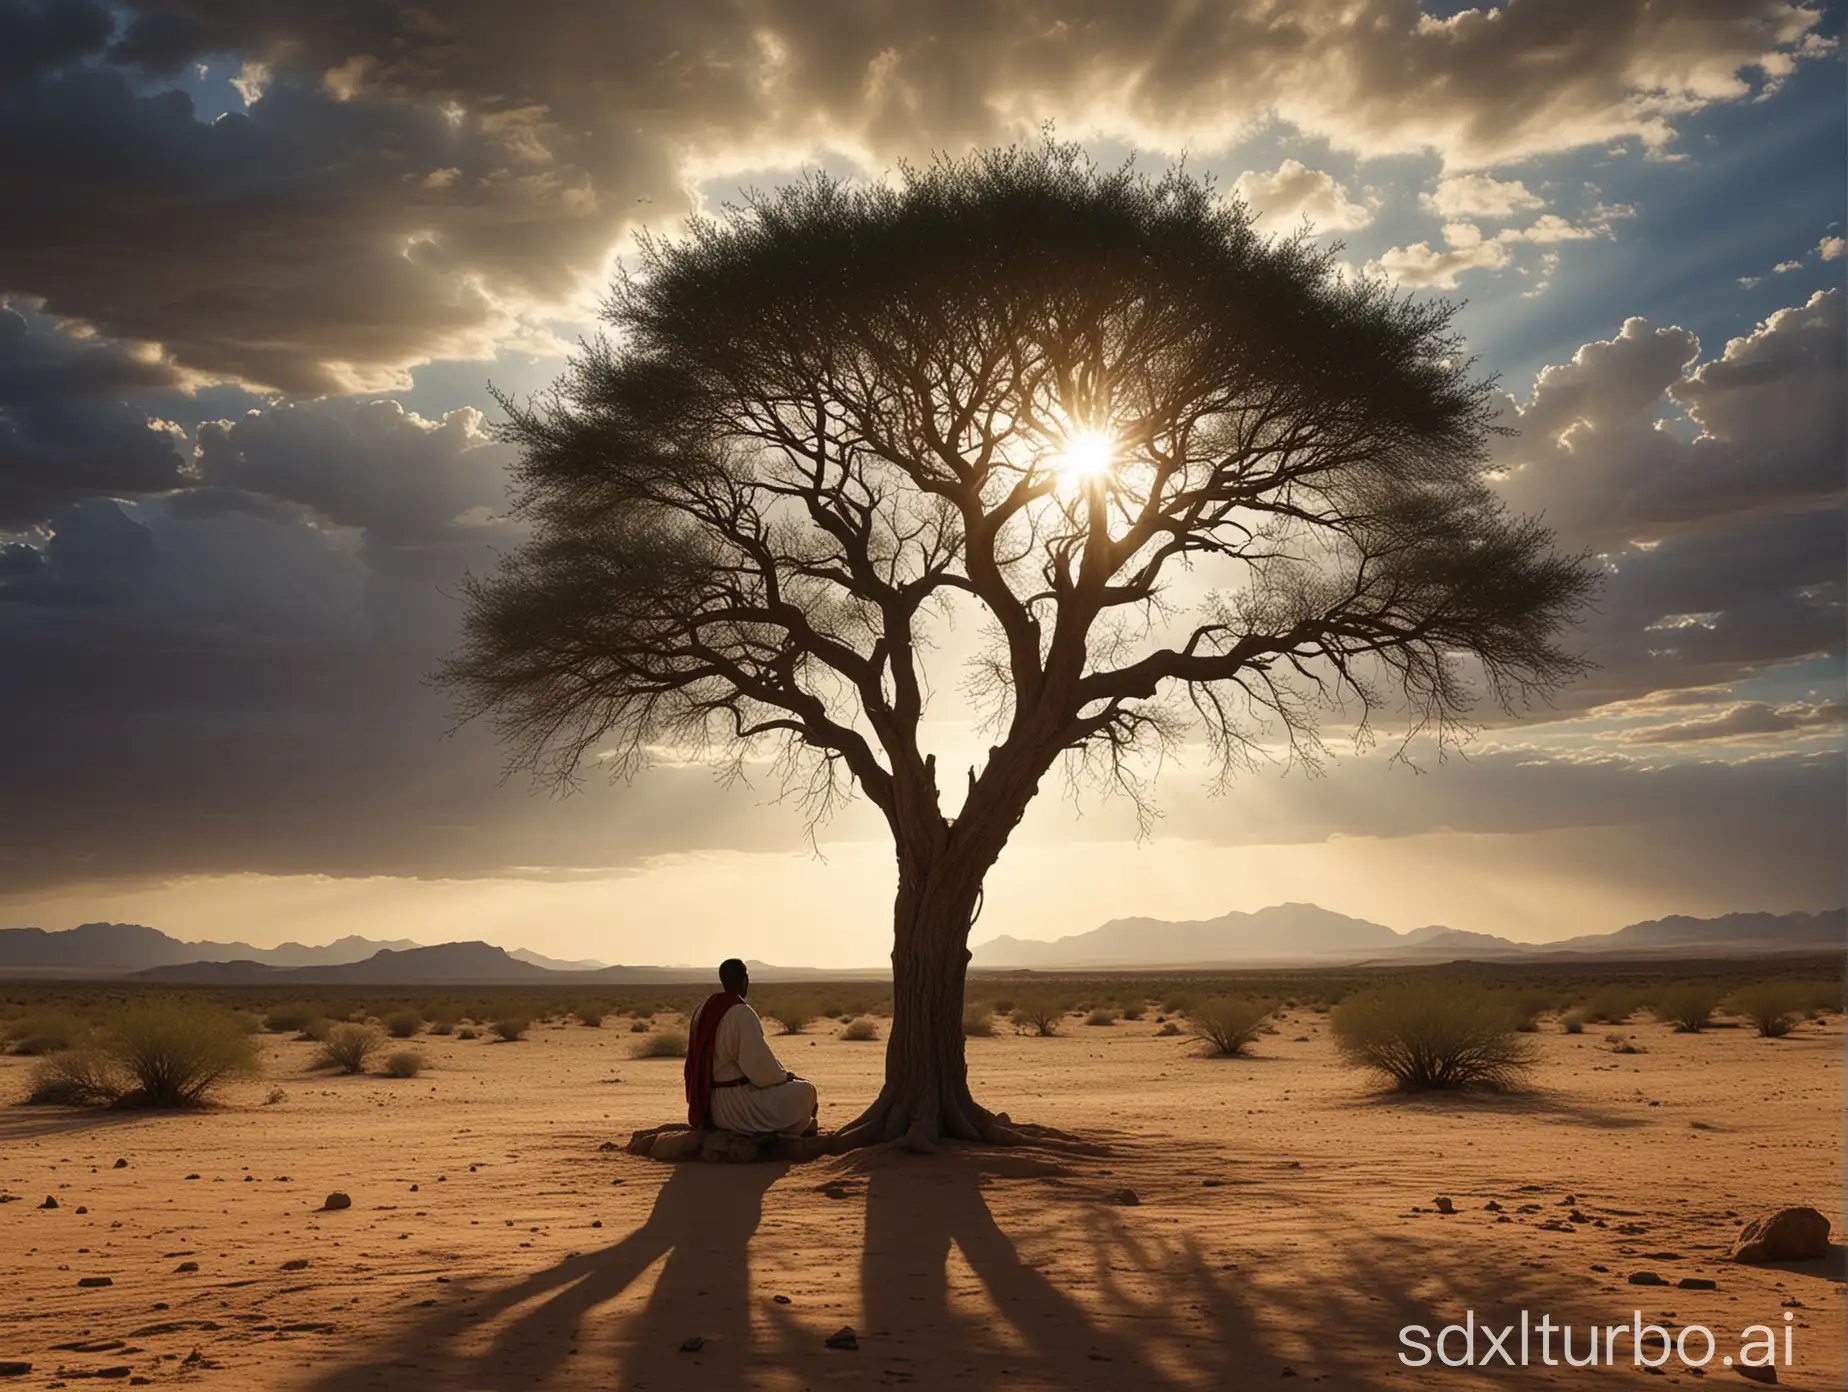 Solitary-Figure-Resting-Under-Biblical-Tree-in-Desert-Landscape